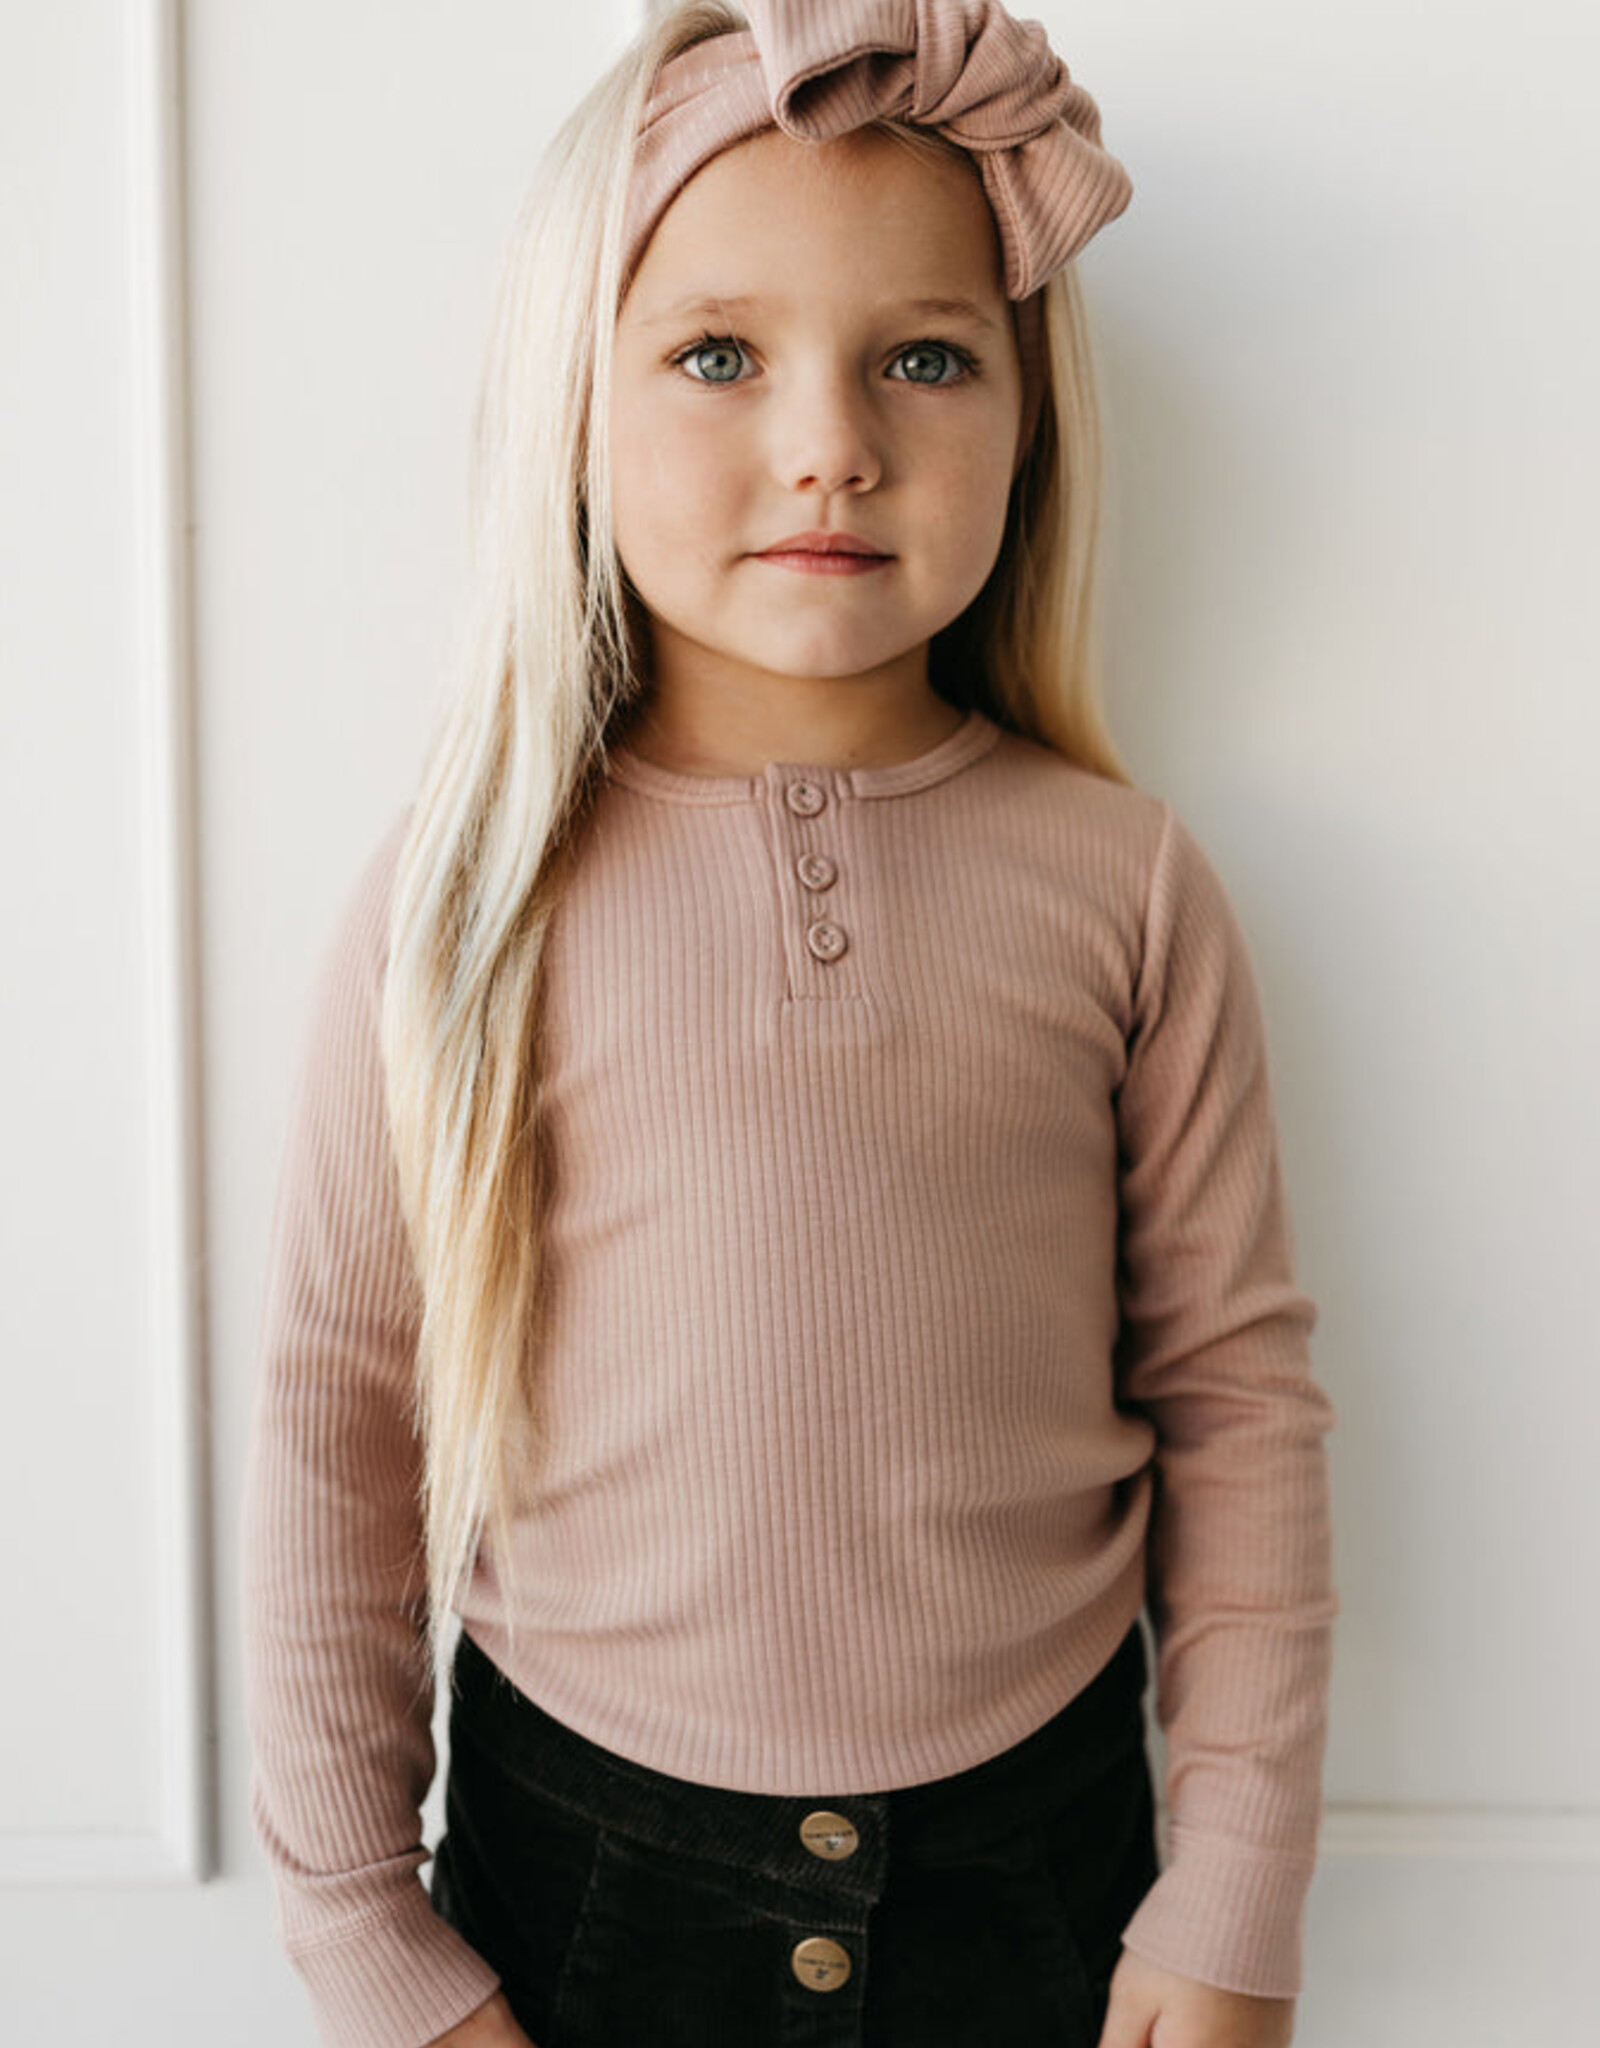 JAMIE KAY 「Organic Cotton Modal Long Sleeve」 子供服 3ヶ月 4ヶ月